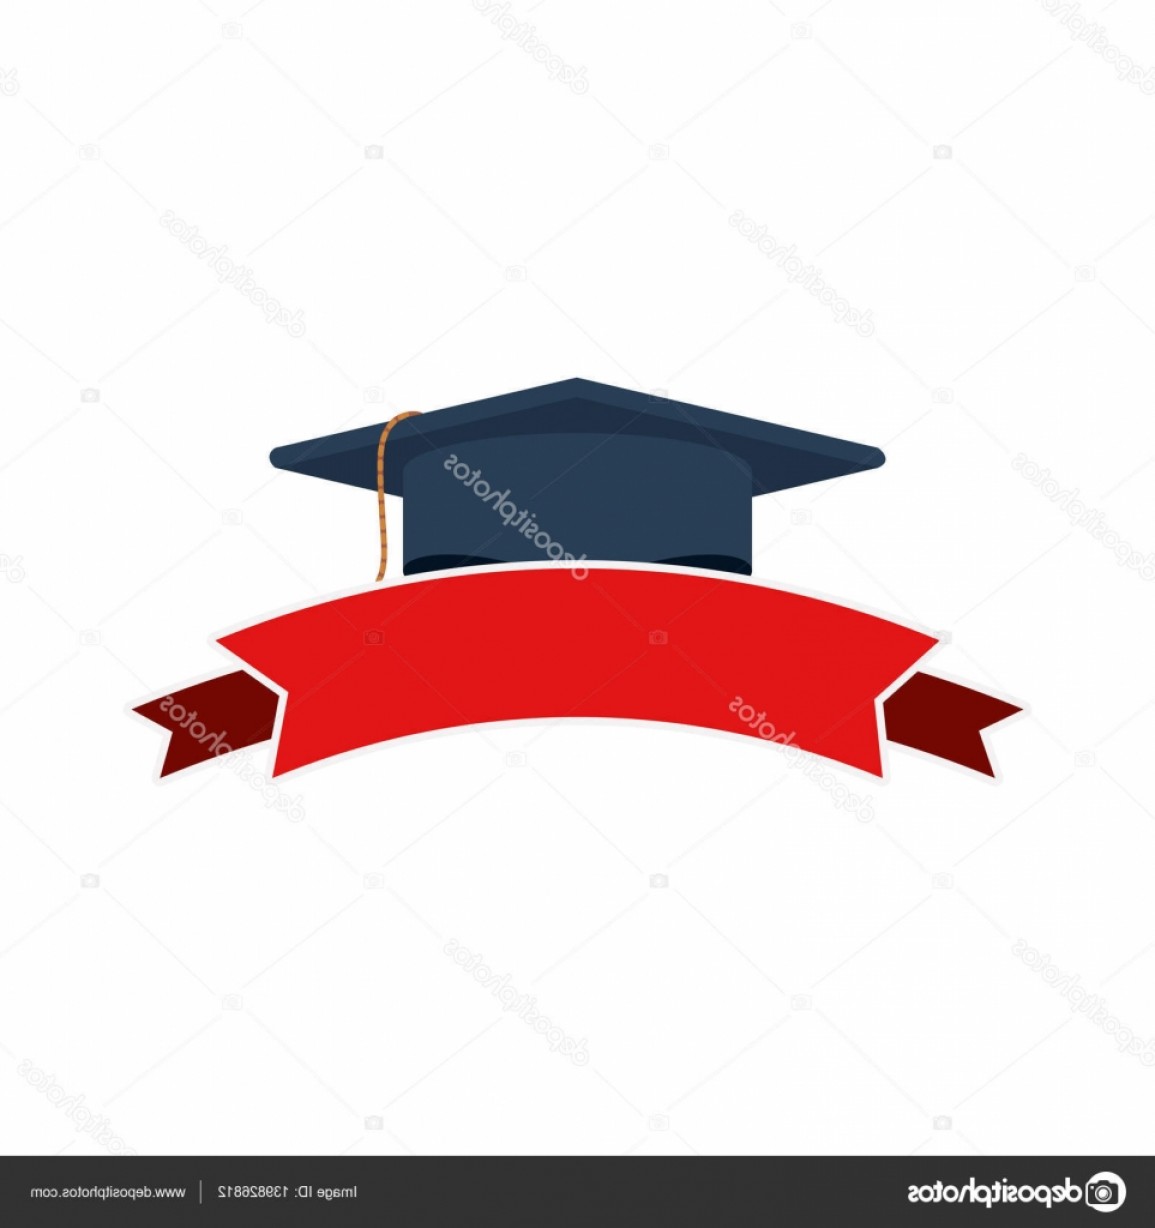 Download Graduation Cap Outline Vector at Vectorified.com | Collection of Graduation Cap Outline Vector ...